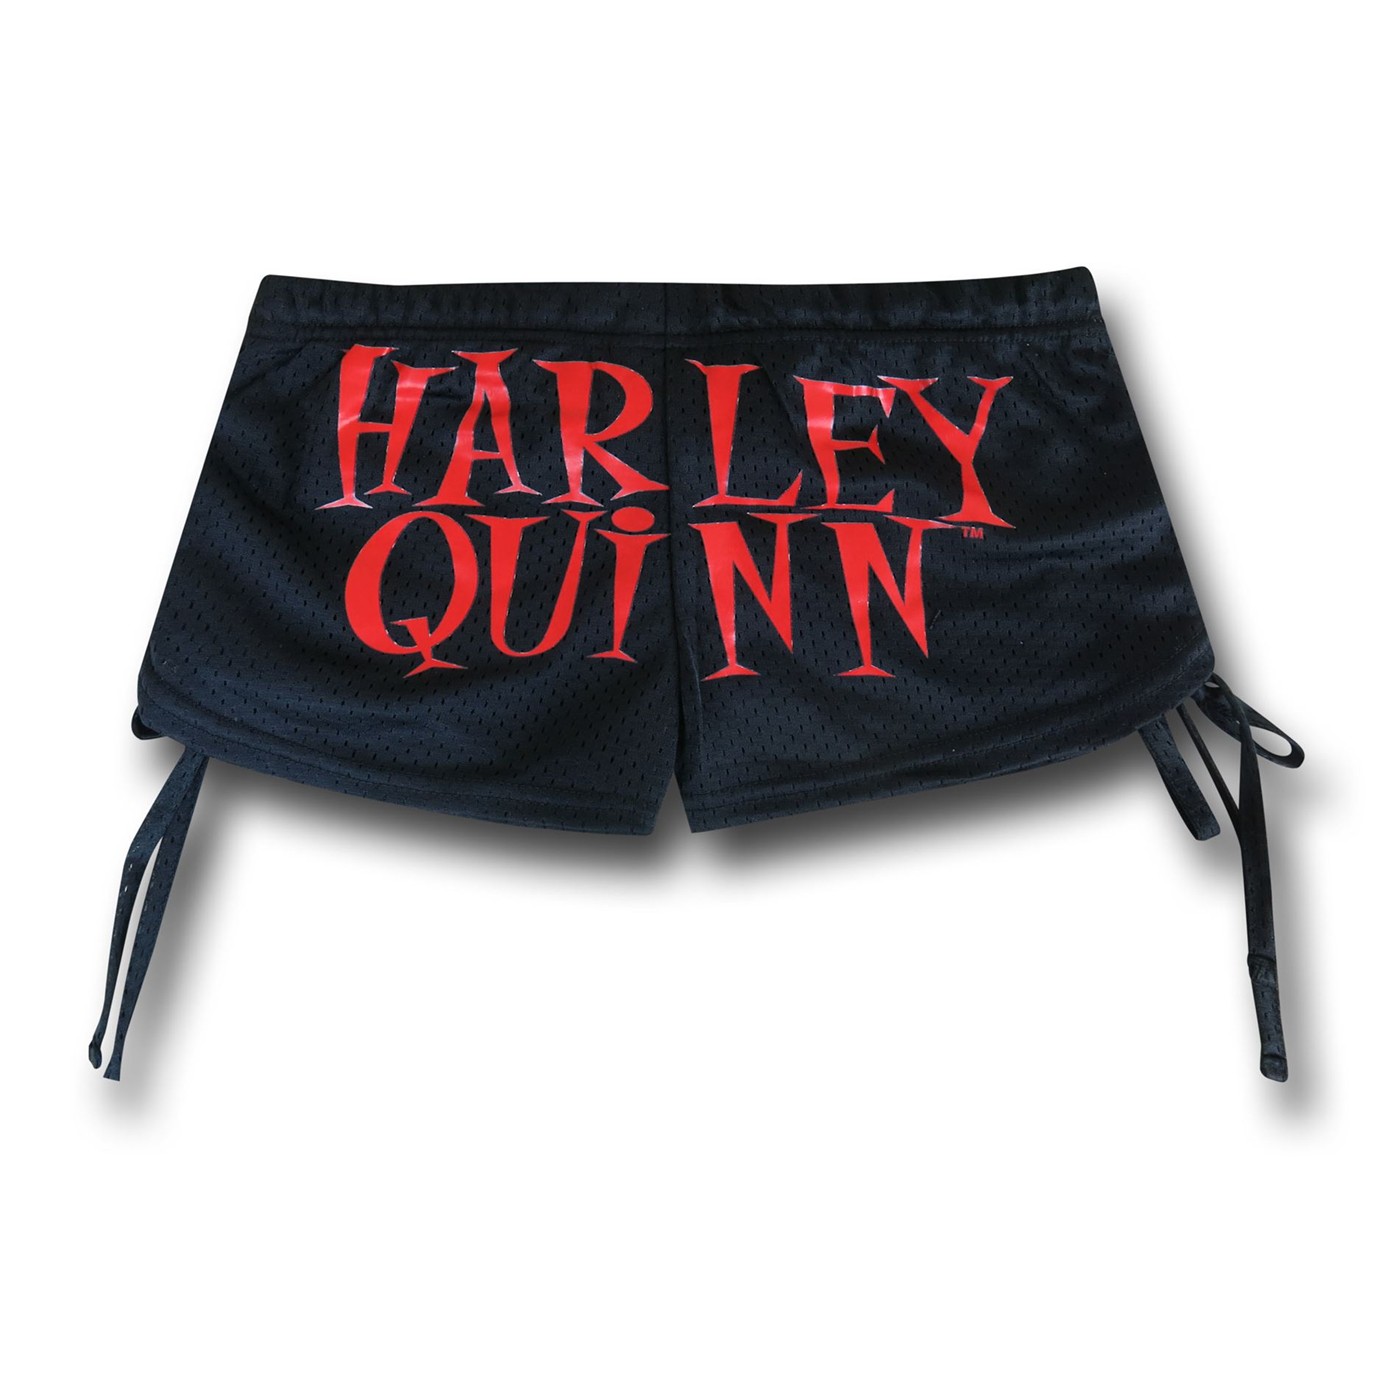 Harley Quinn Women's Mesh Shorts